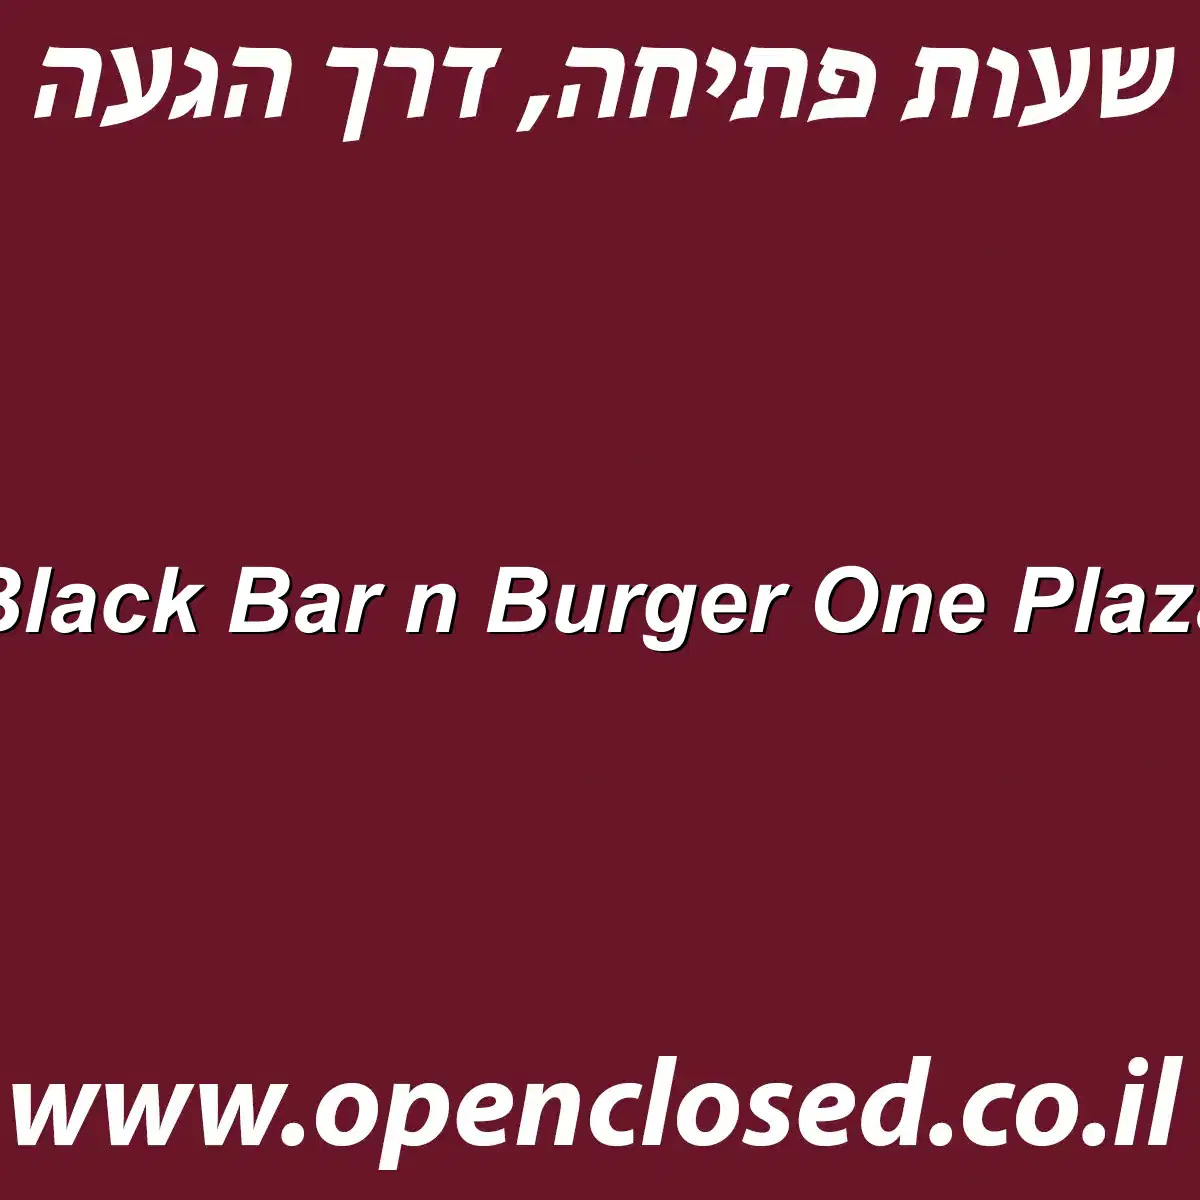 Black Bar n Burger One Plaza